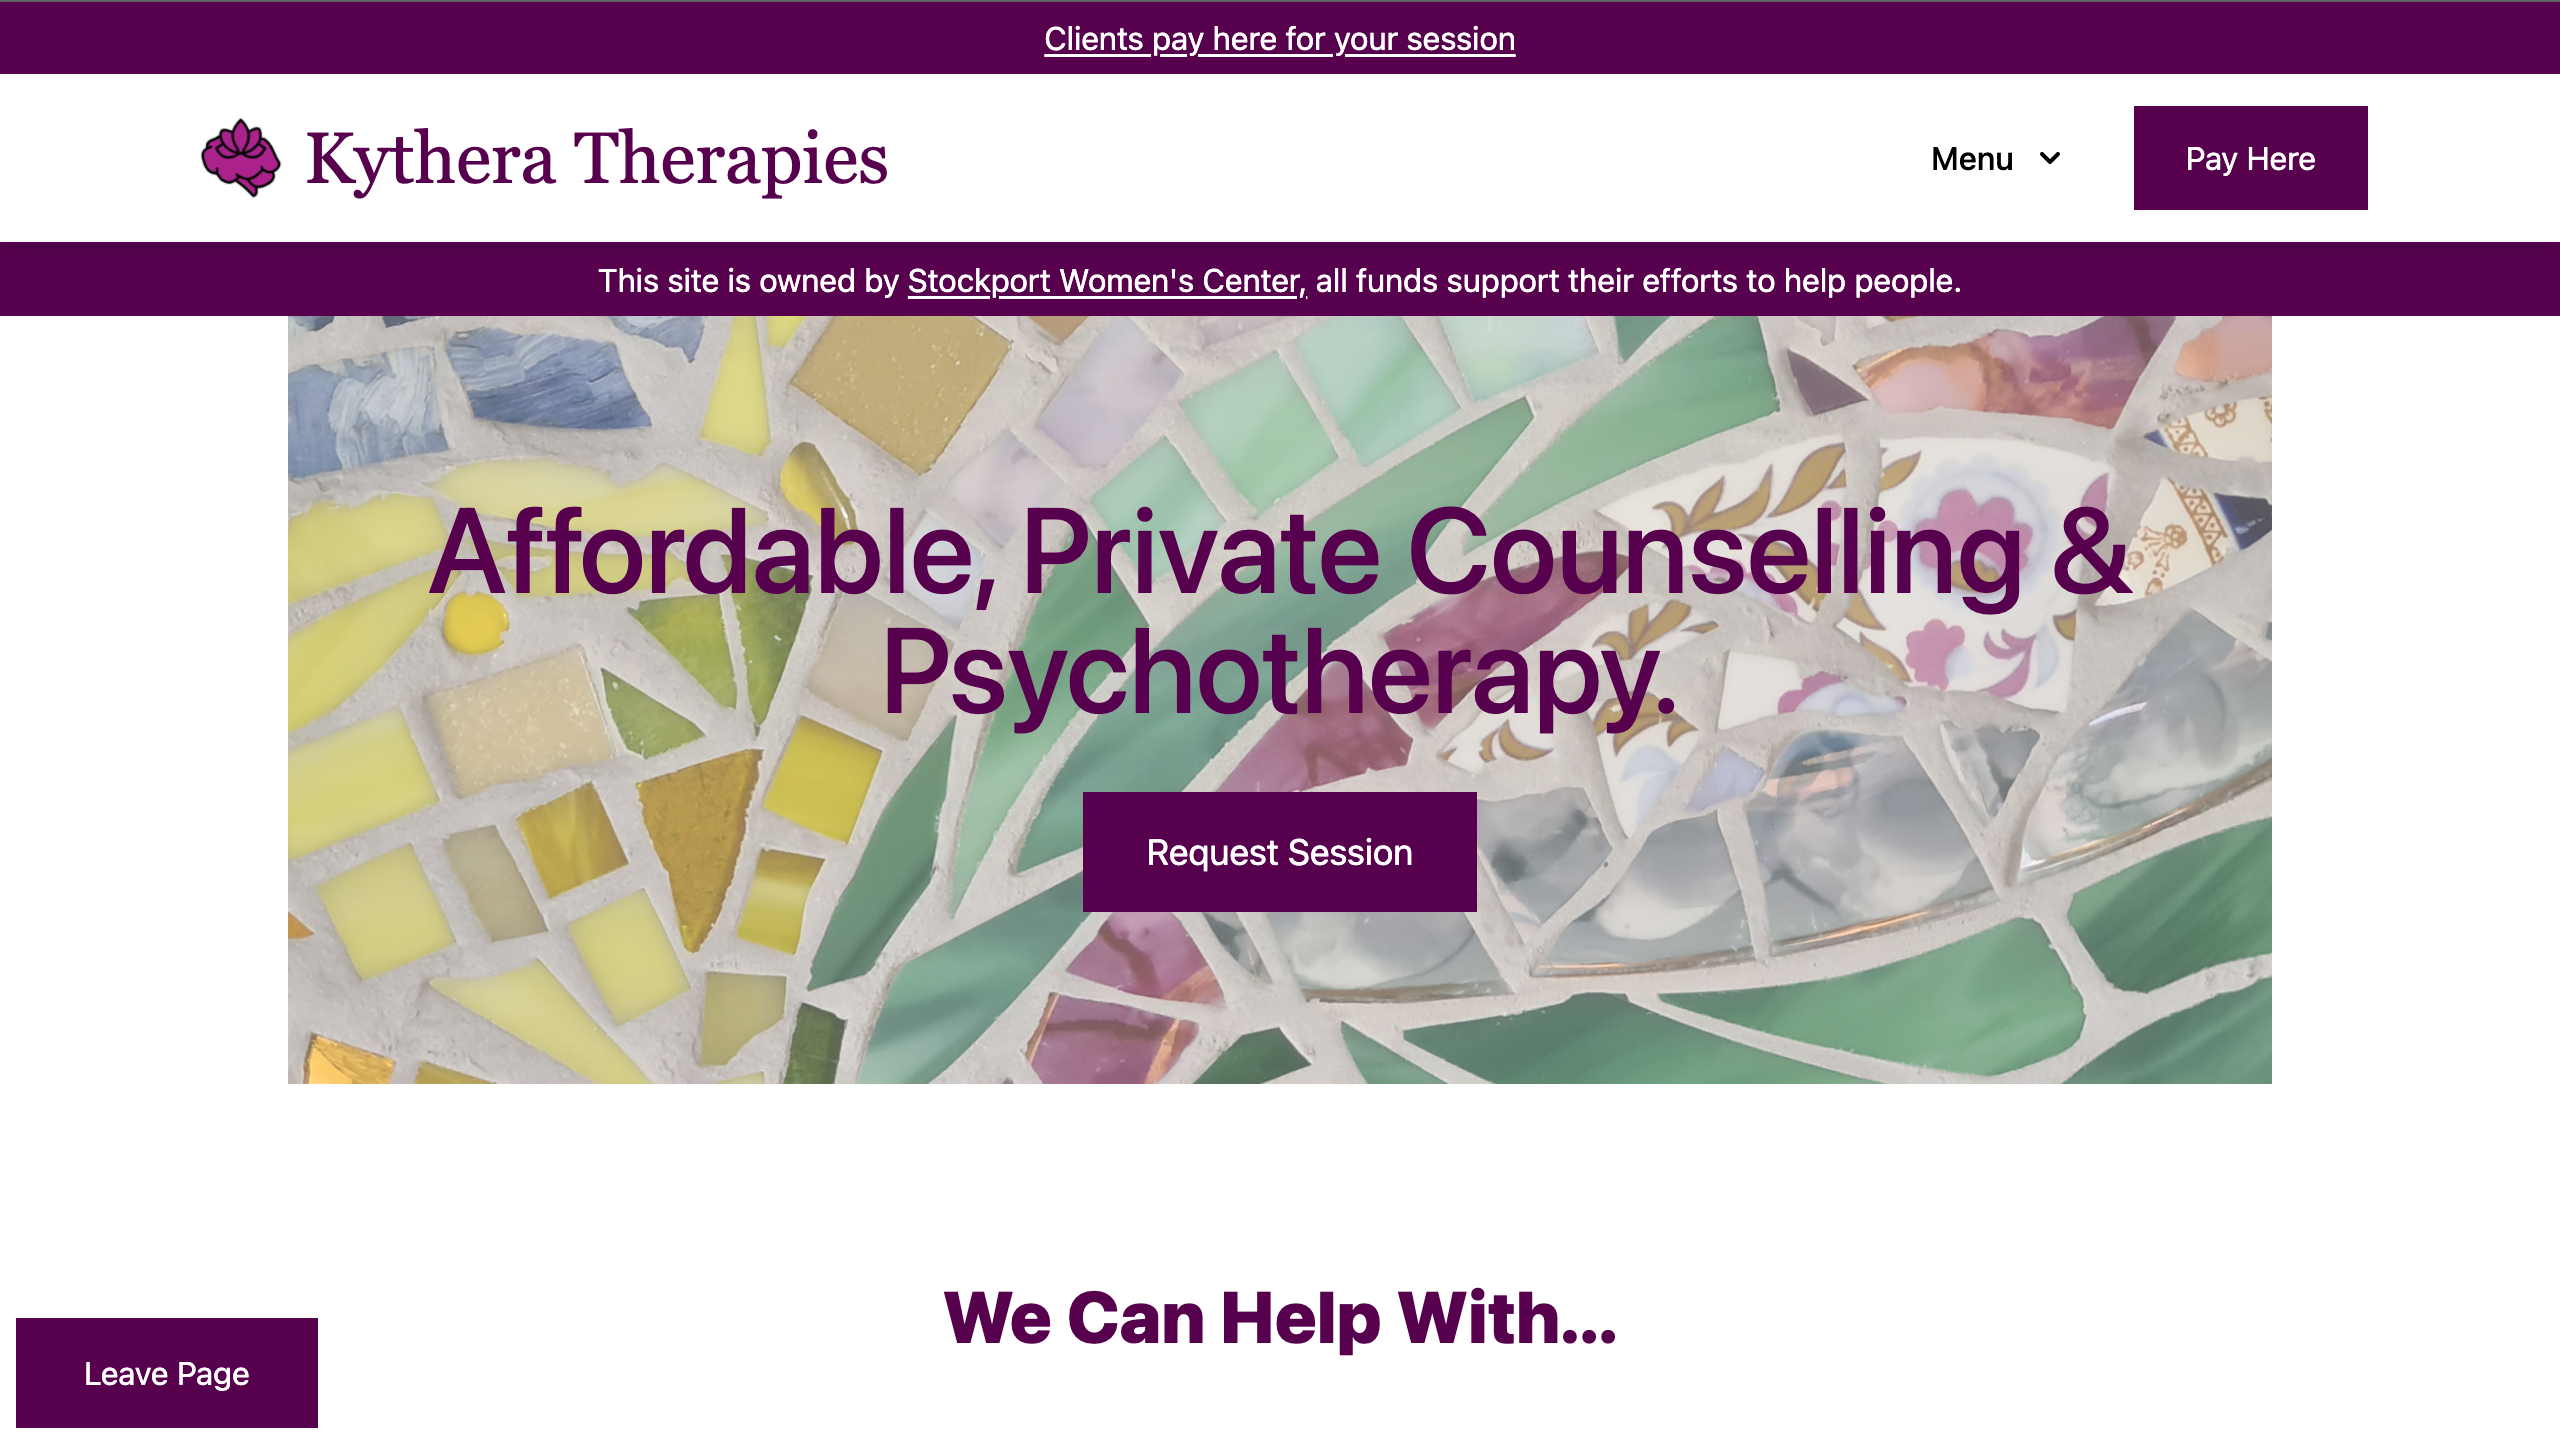 Kythera therapies desktop screenshot of homepage